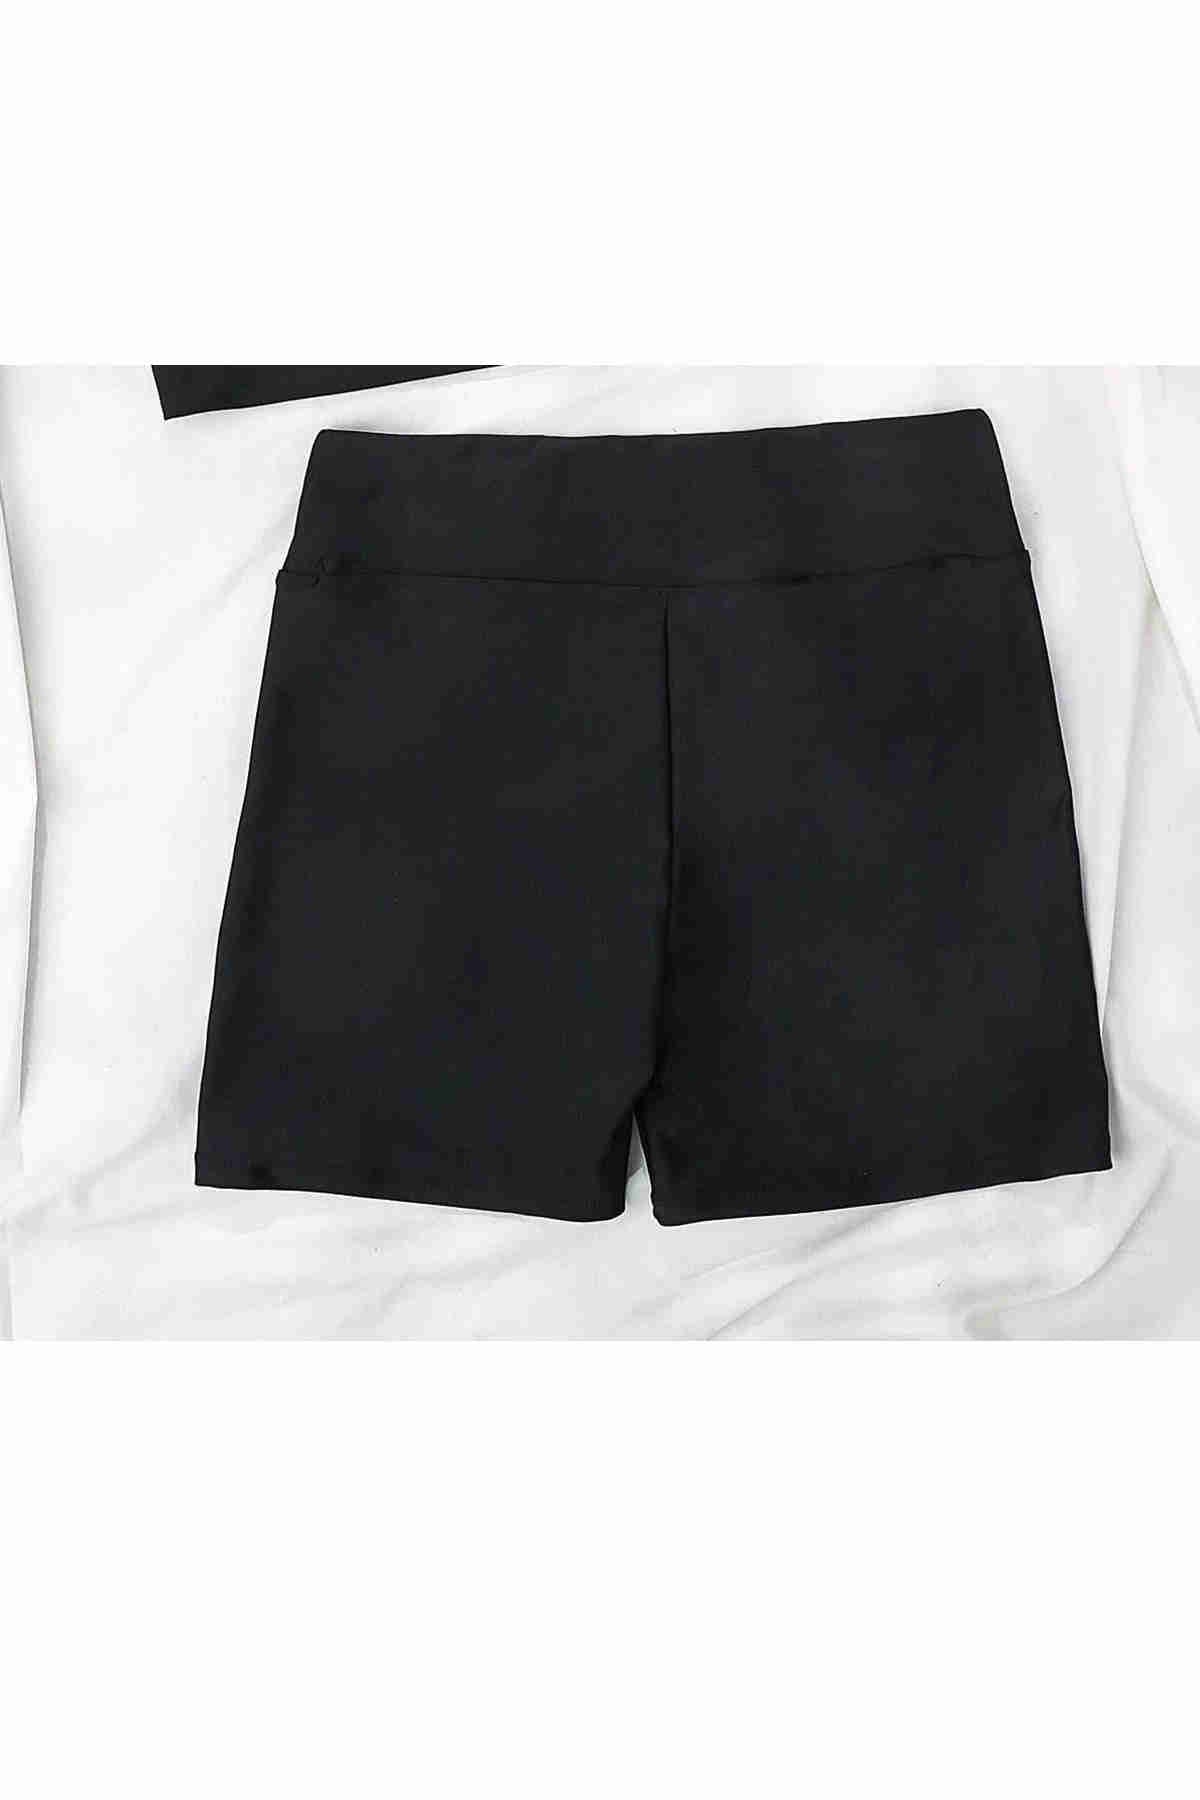 Stylish Marine shorts Black Piamoda